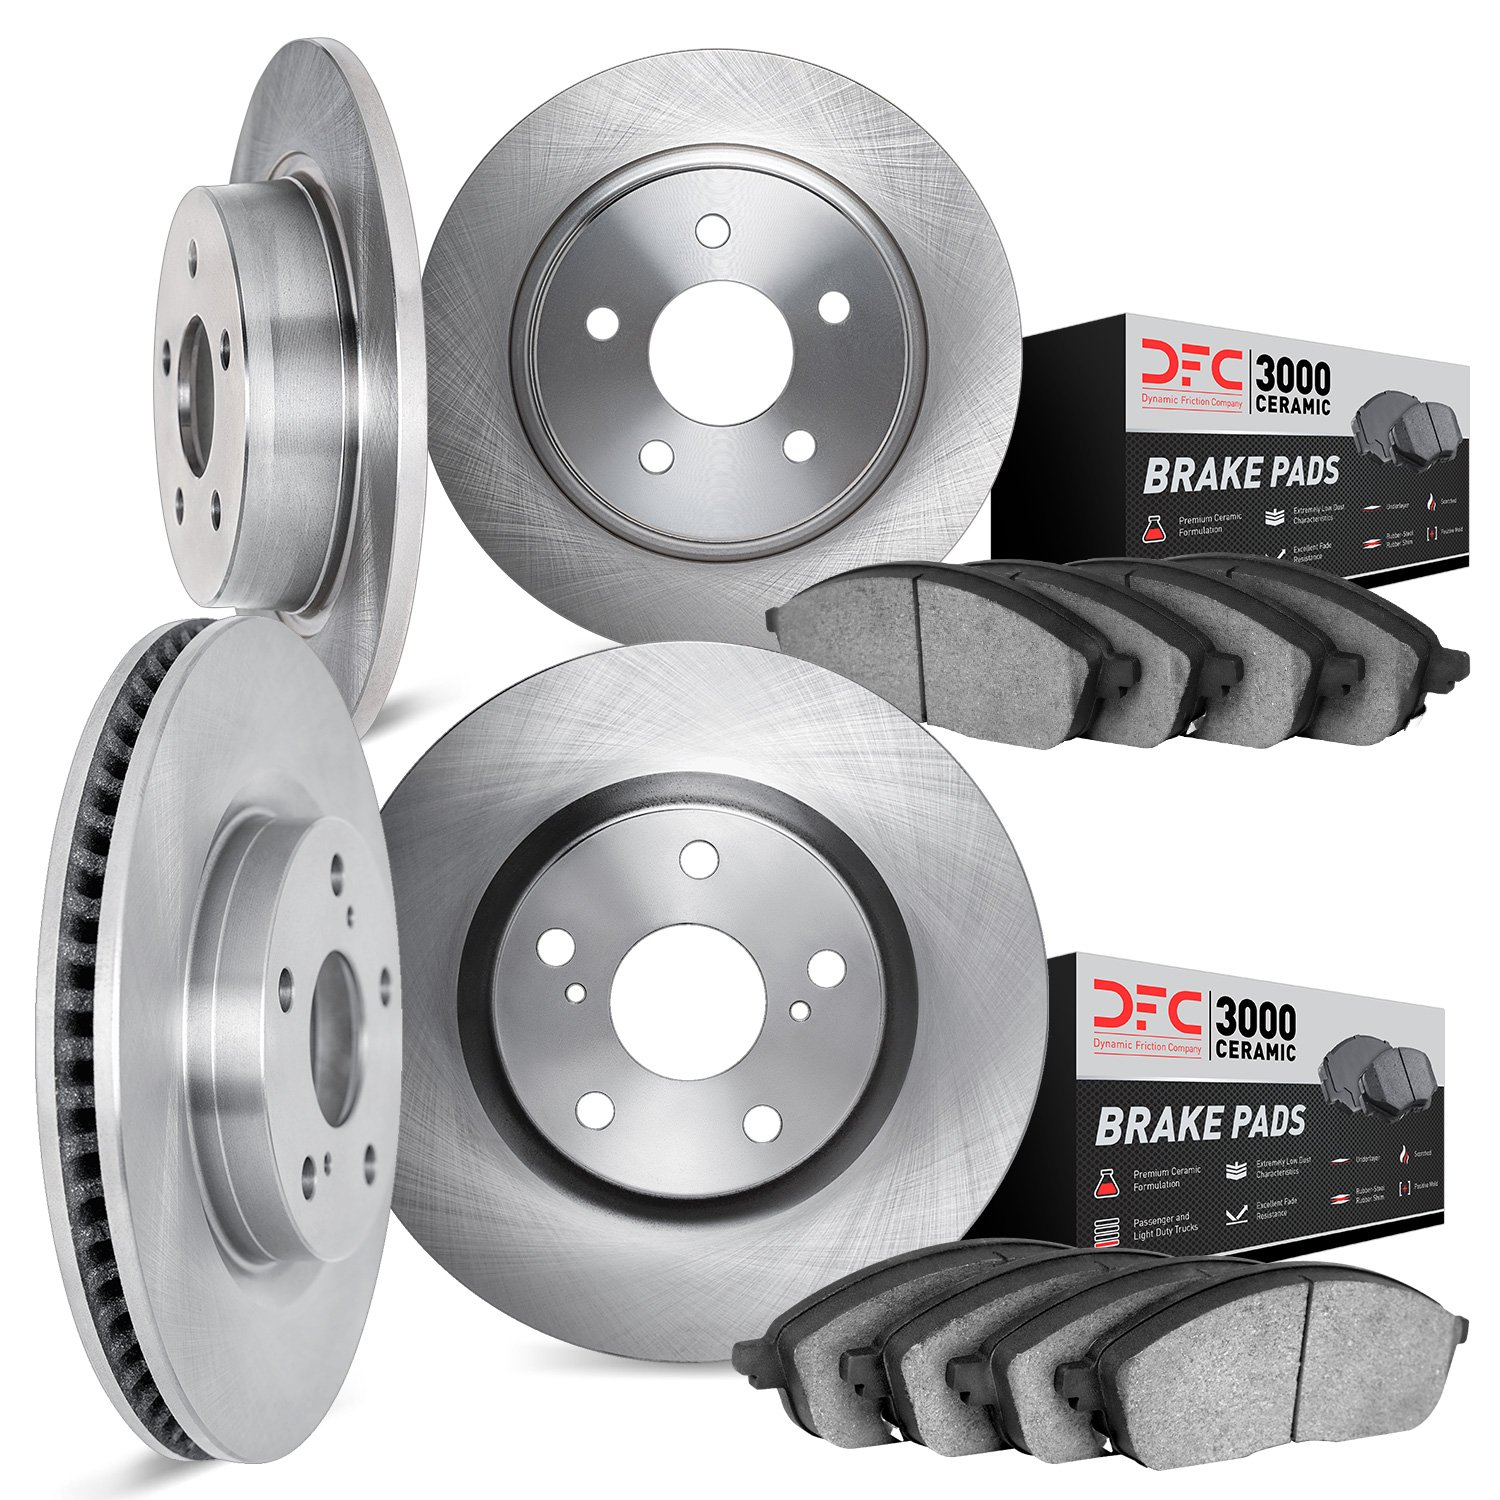 6304-59052 Brake Rotors with 3000-Series Ceramic Brake Pads Kit, 2011-2015 Acura/Honda, Position: Front and Rear